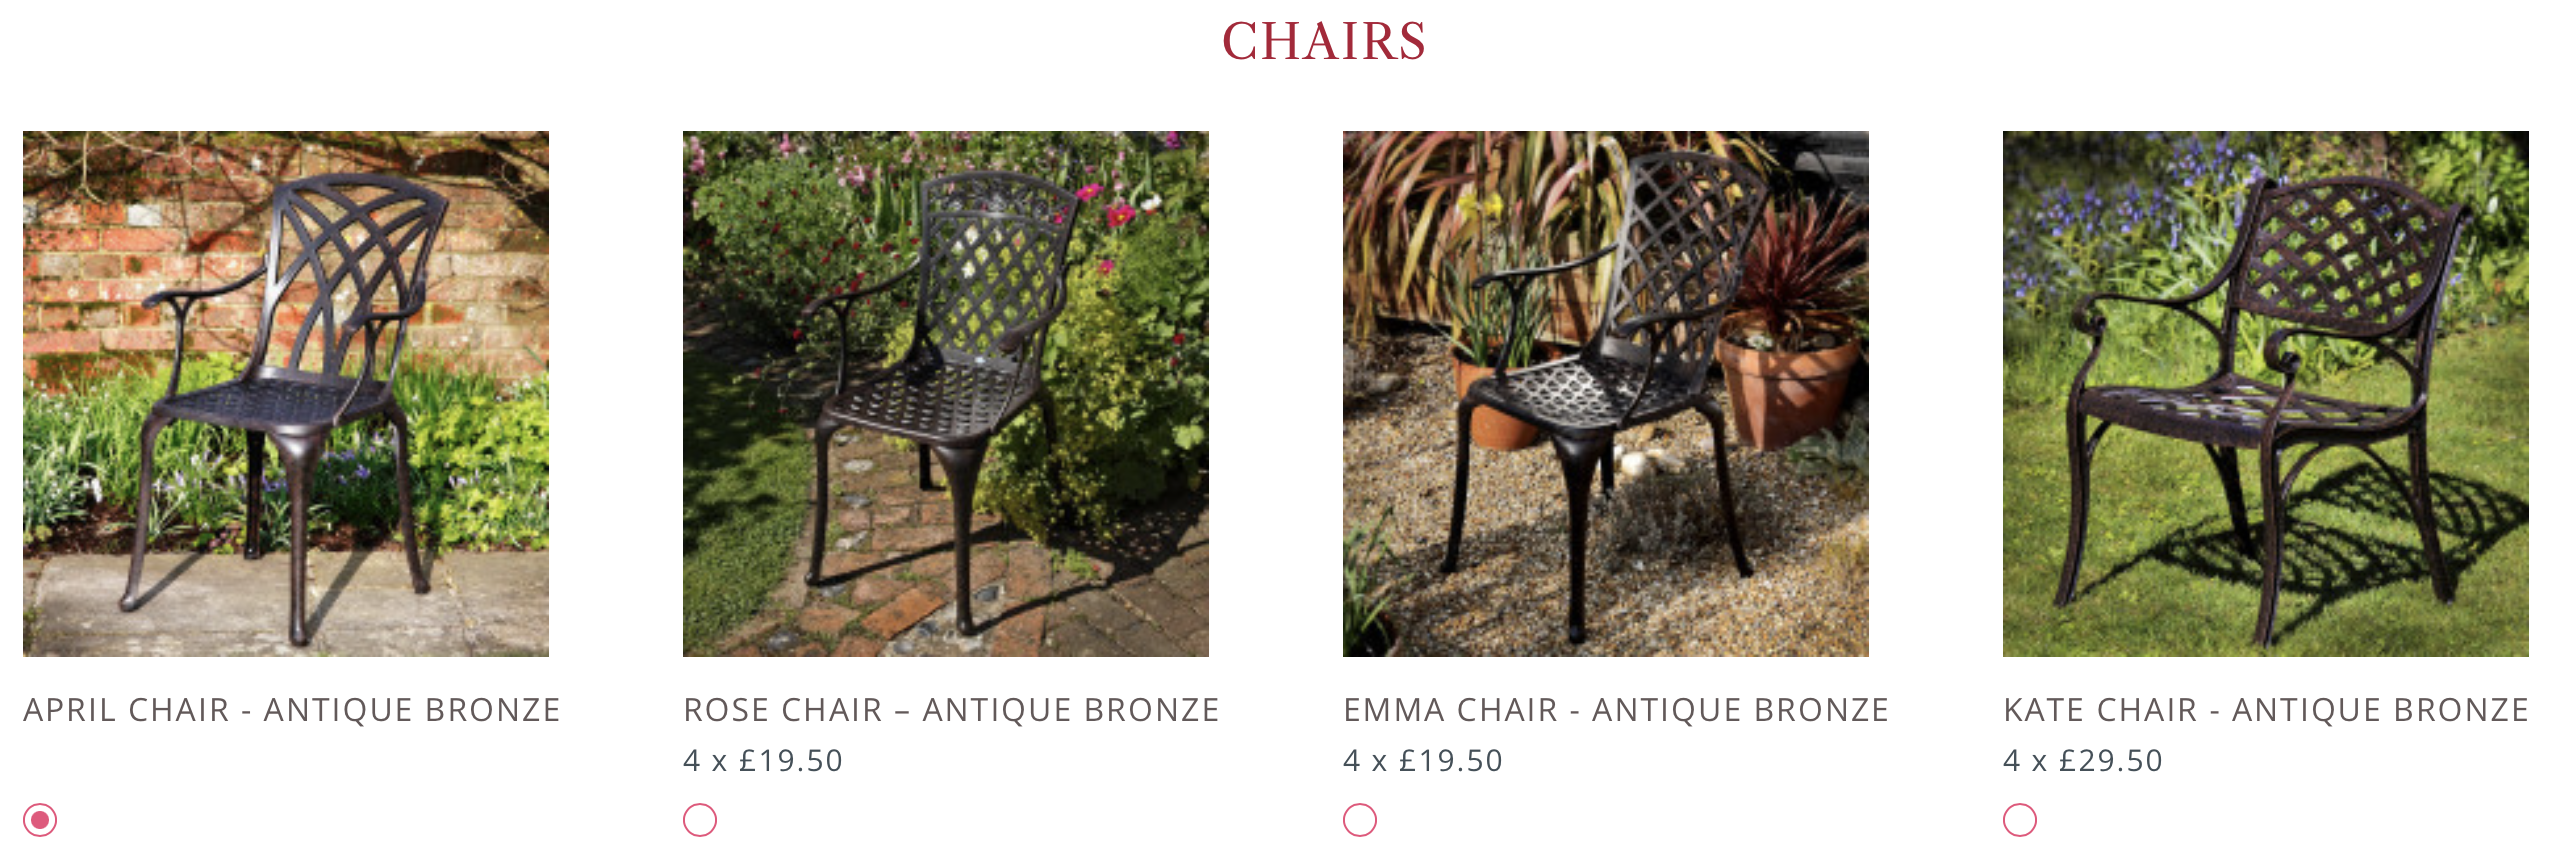 Alice Garden Chair Options & Upgrades